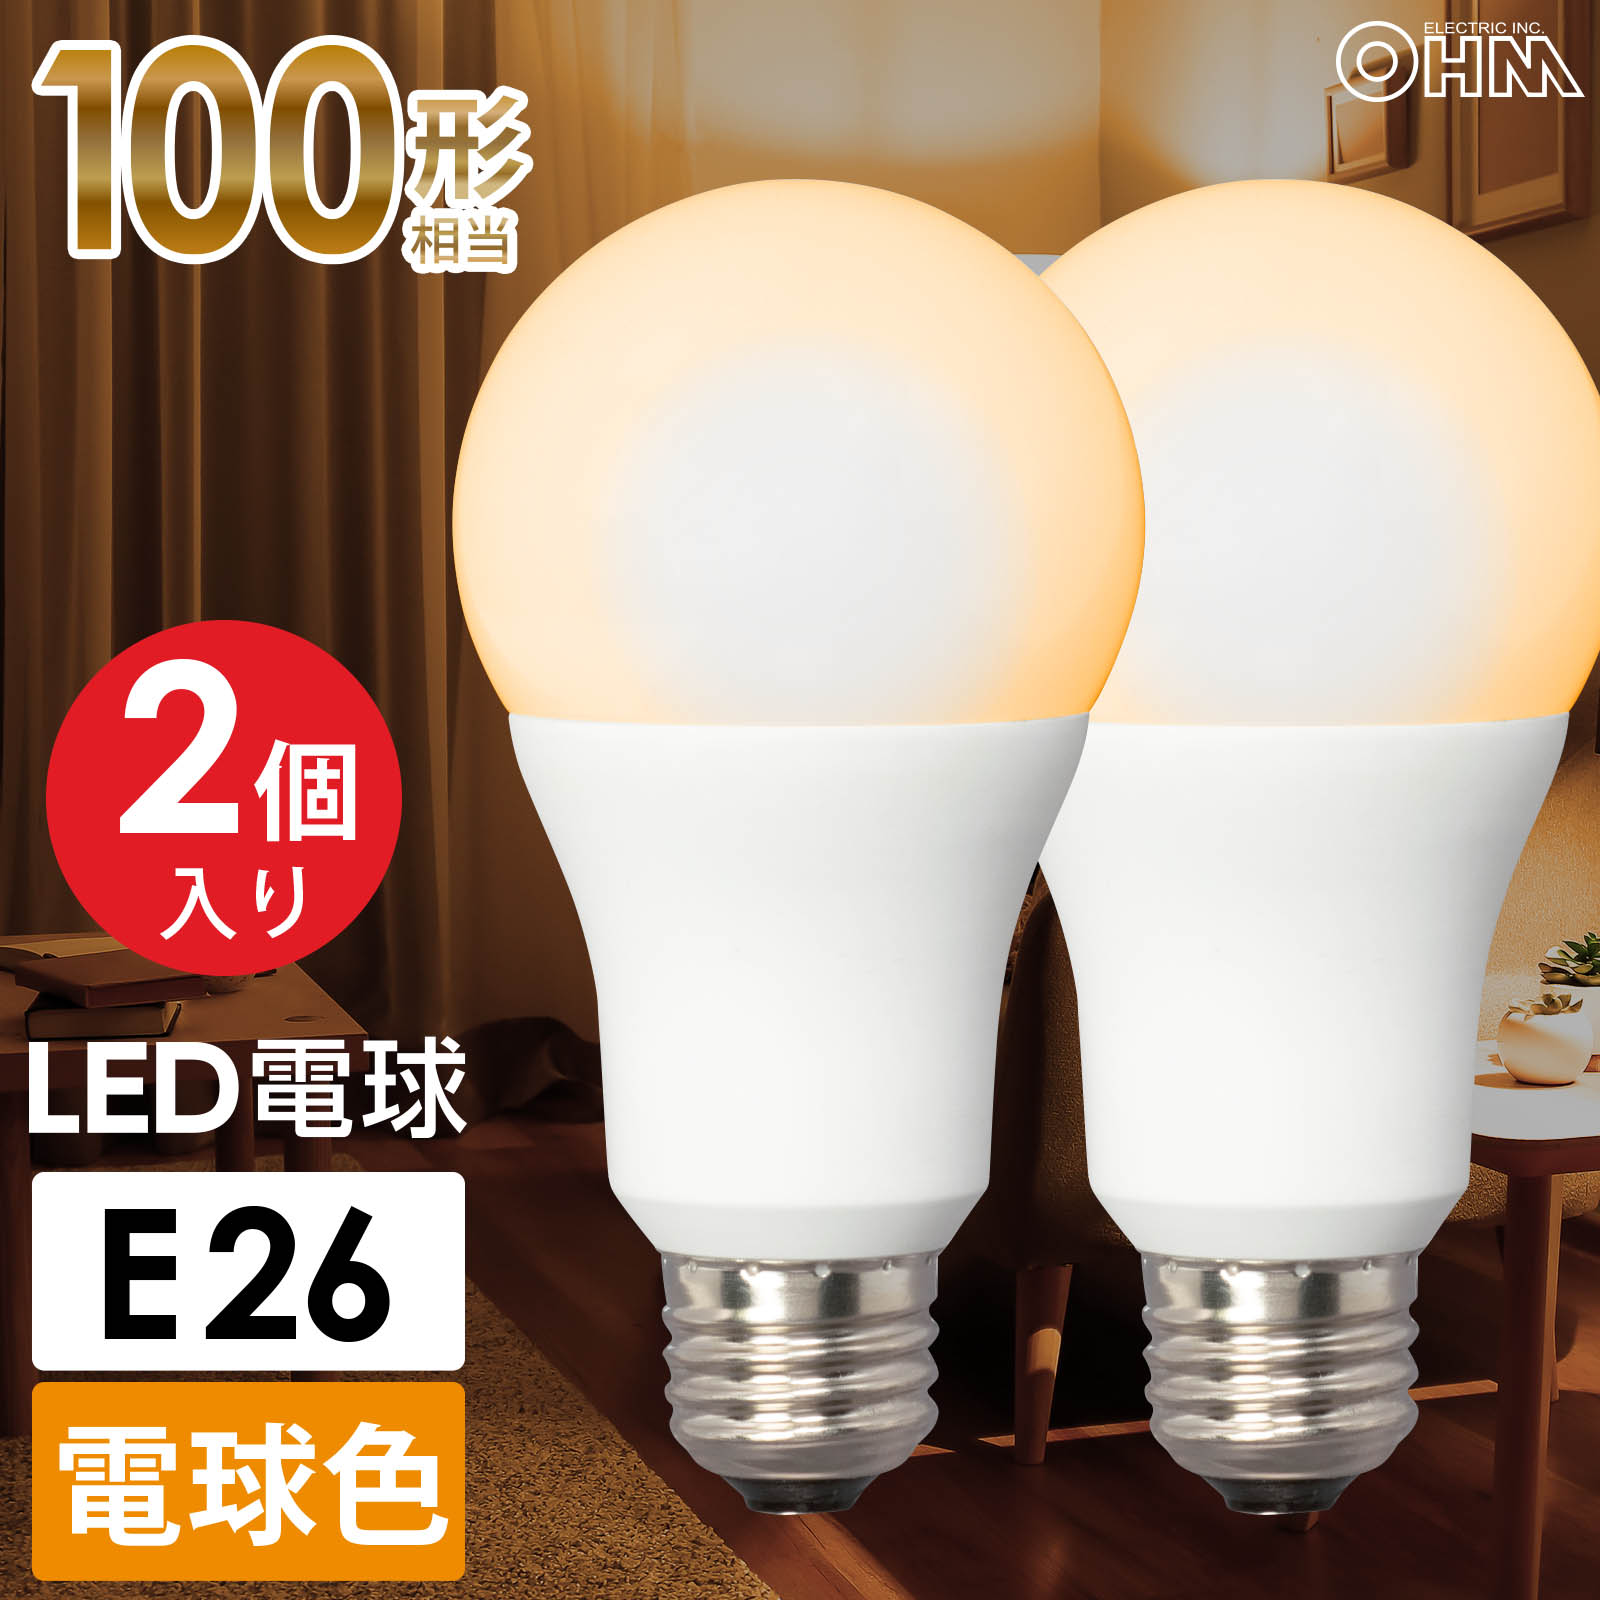 LED電球 E26 100形相当 電球色 広配光 2個入｜LDA13L-G AG52 2P 06-4710 オーム電機